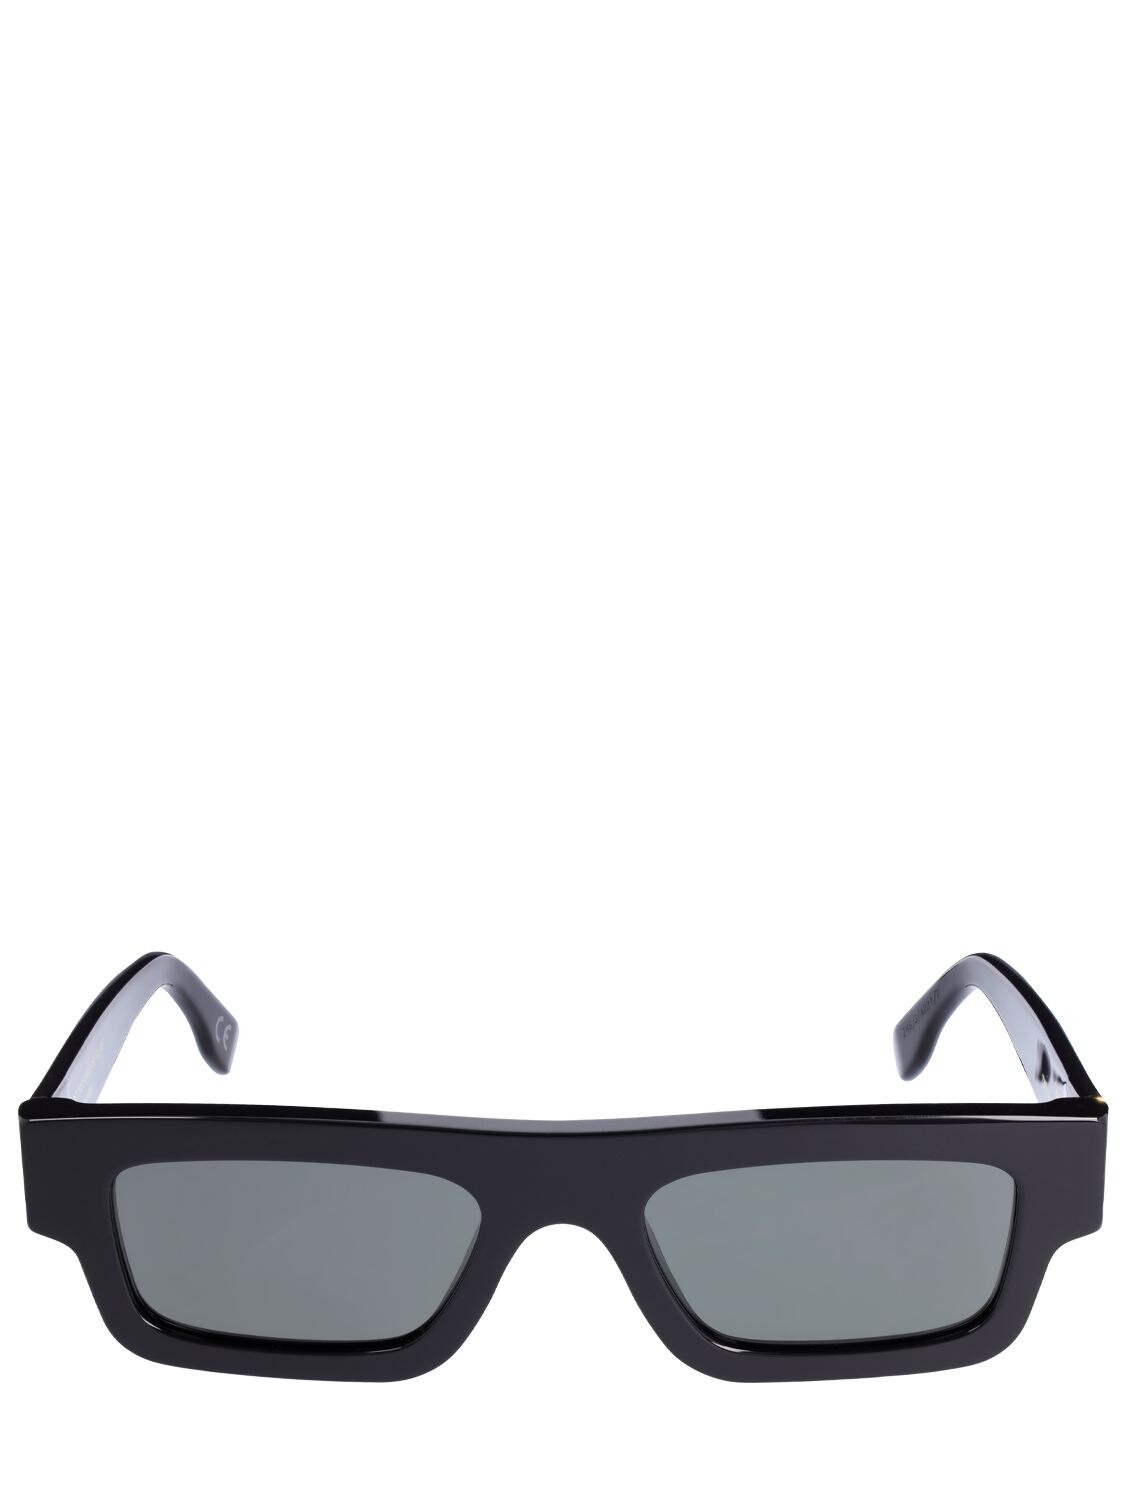 Shop Retrosuperfuture Colpo Black Squared Acetate Sunglasses